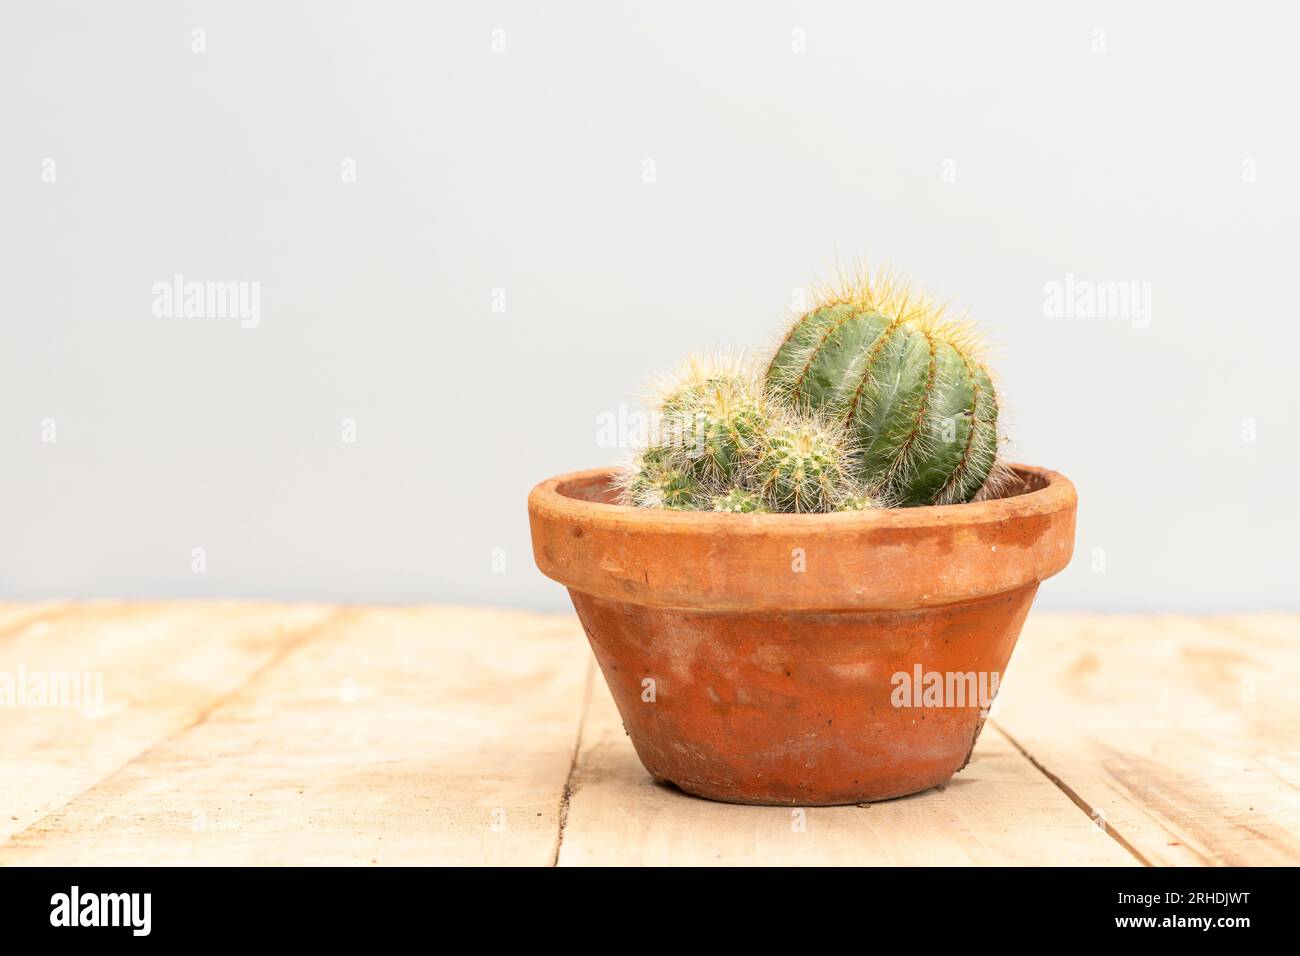 Echinocereus pectinatus cactus closeup view Stock Photo